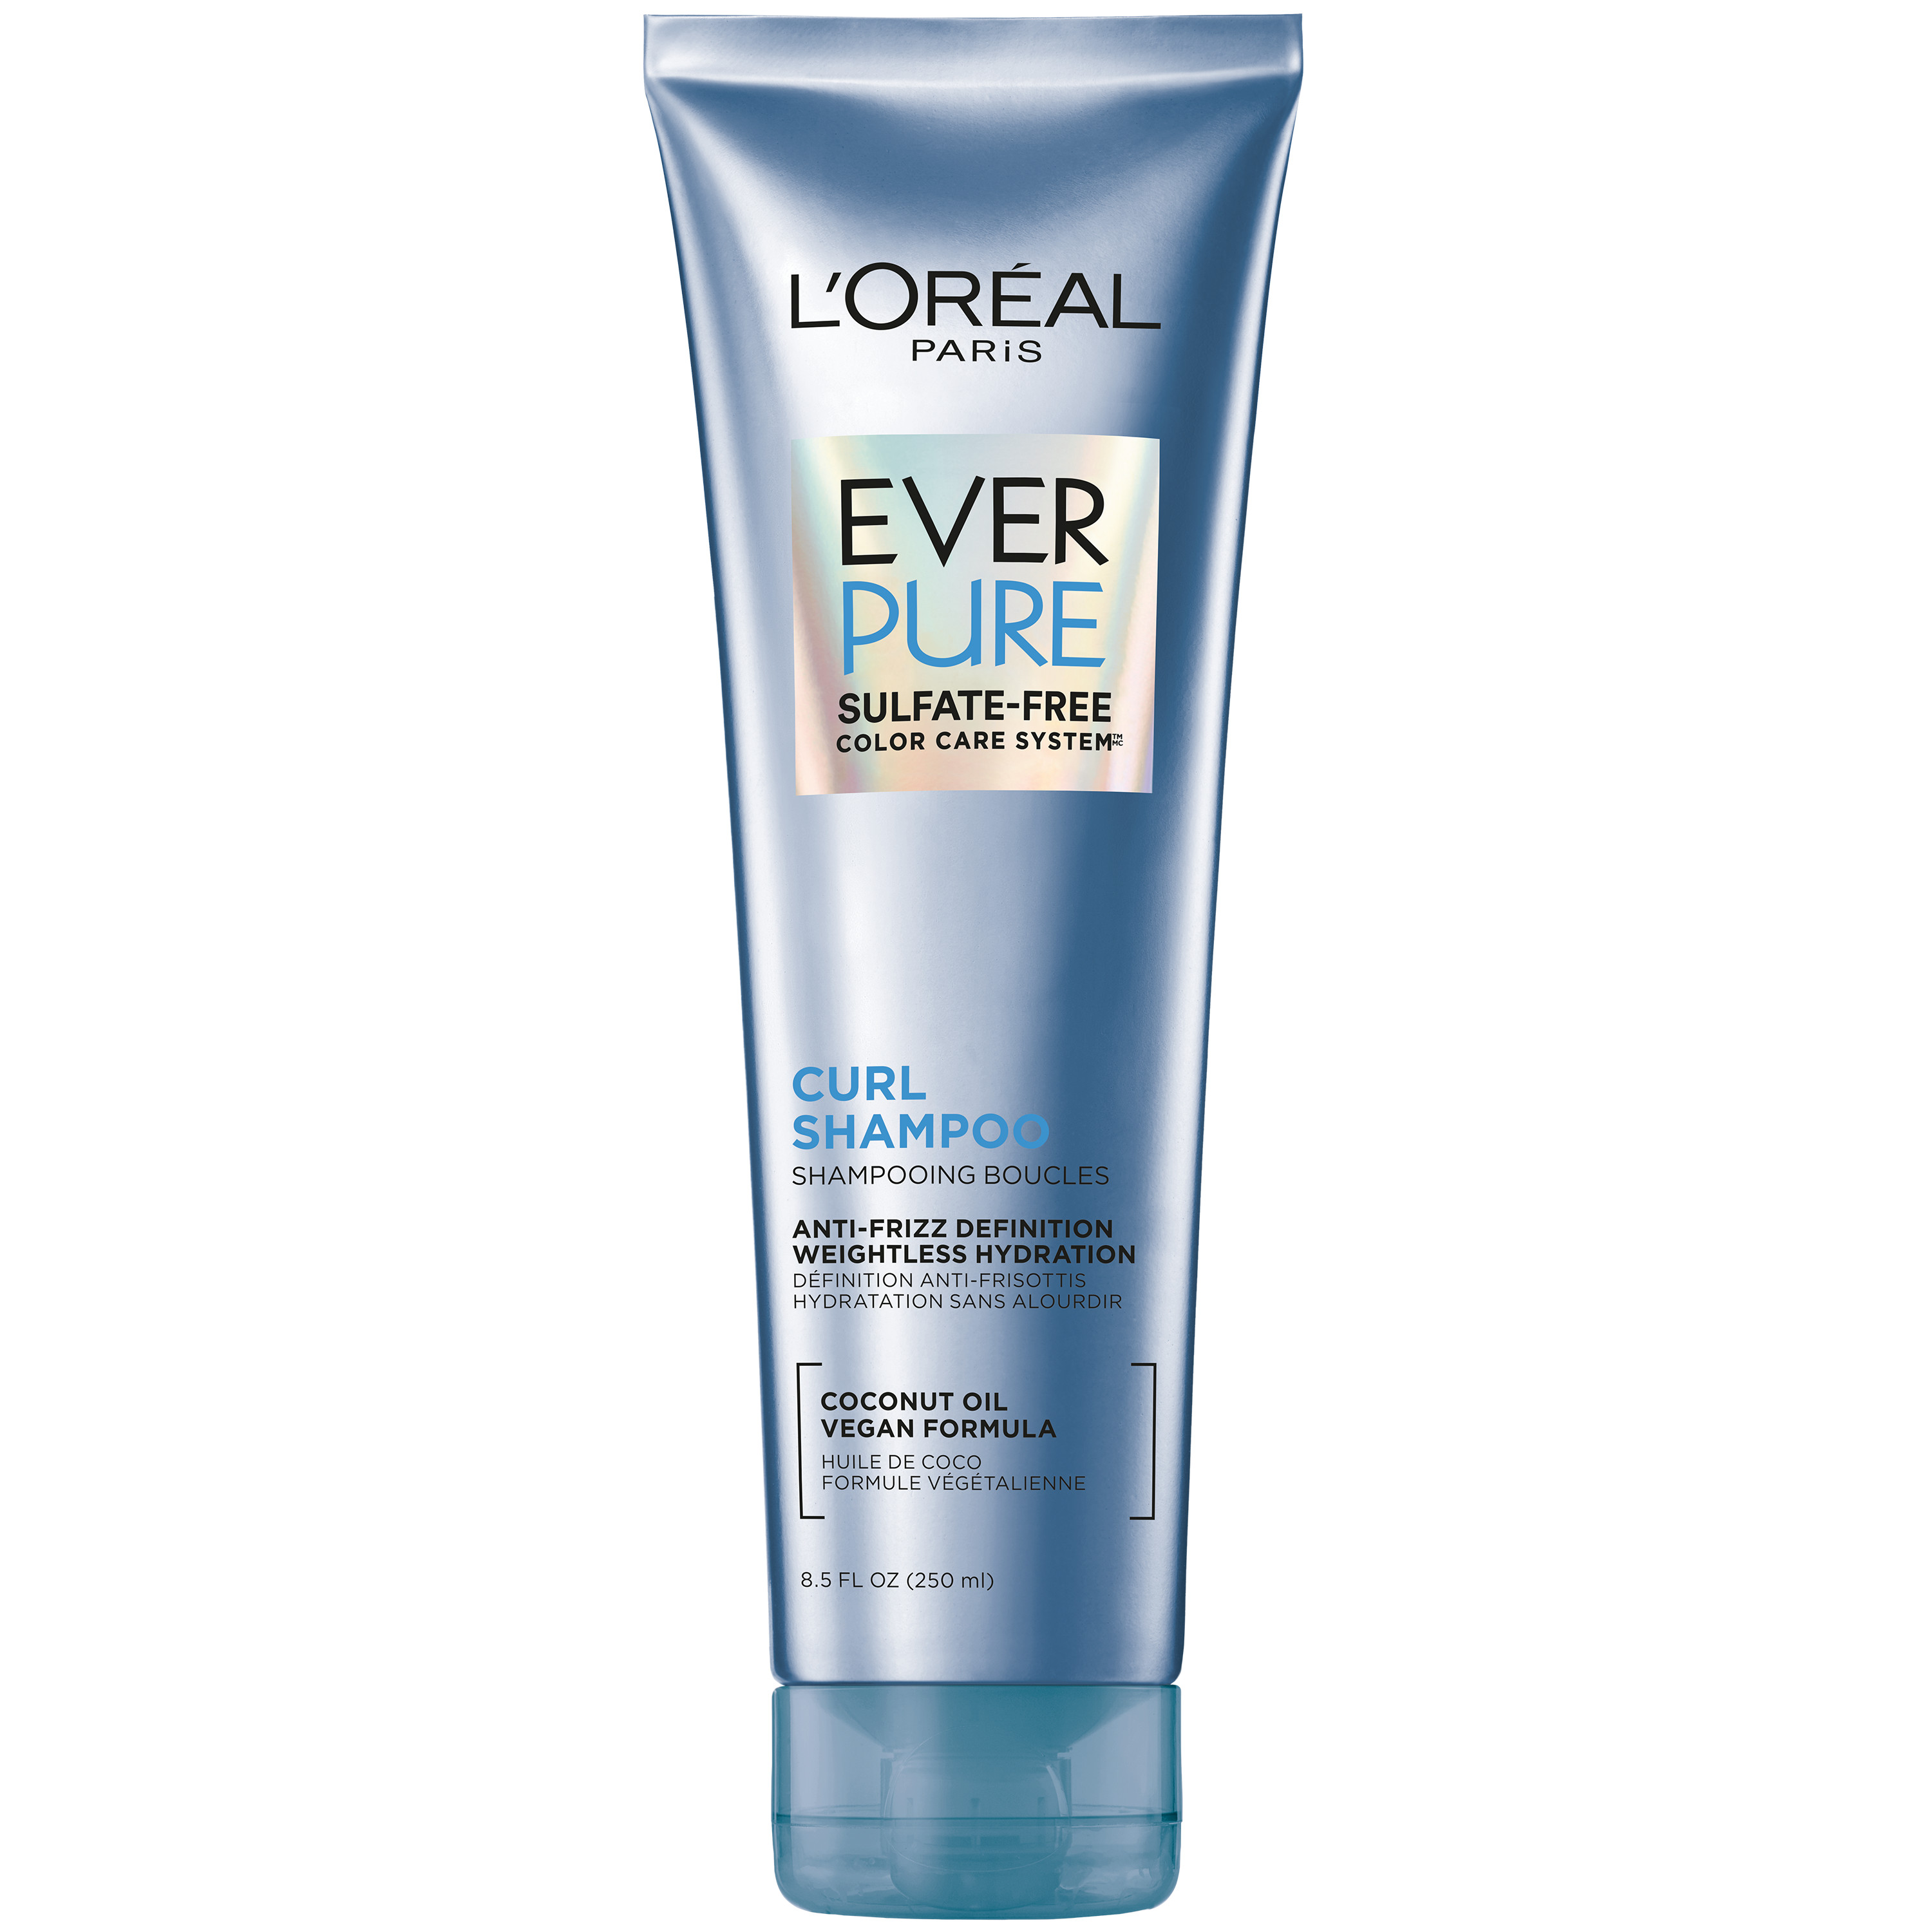 L'Oreal Paris Evercurl Sulfate Free Curl Care System Hydracharge Shampoo, 8.5 fl oz - image 1 of 10